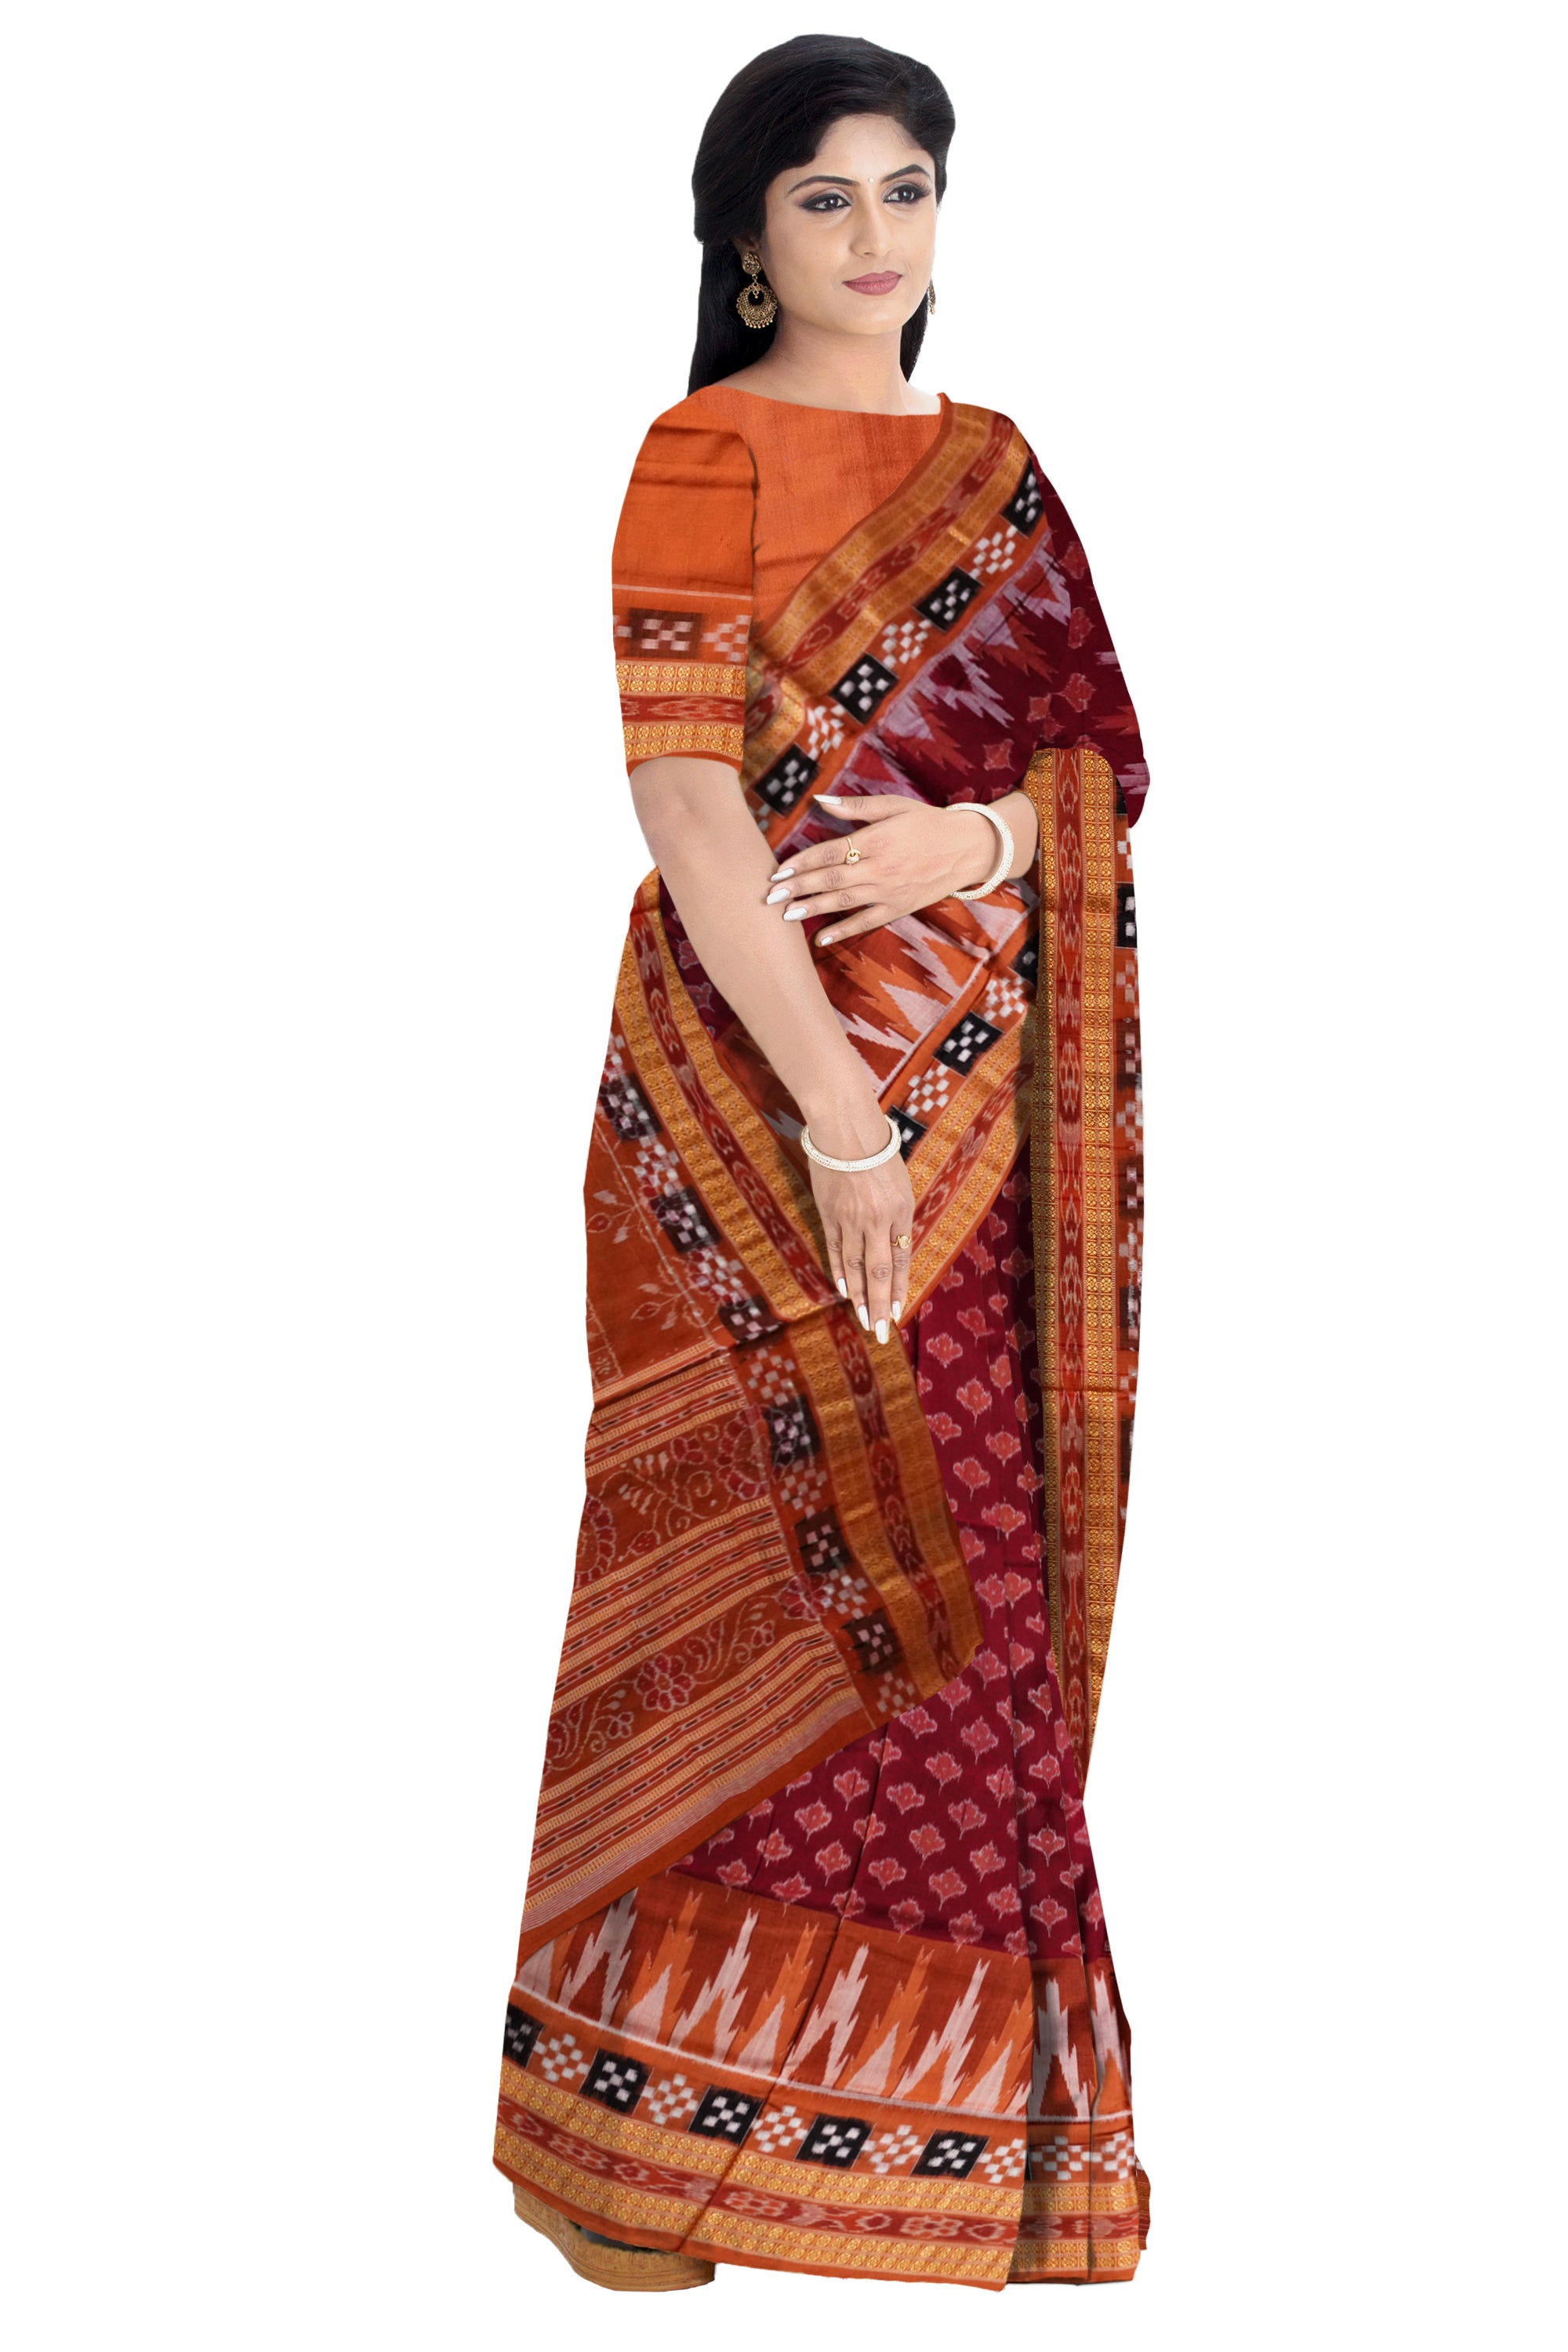 Coffee and mattha colour leaf design with dhadi pasapali pattern cotton saree. - Koshali Arts & Crafts Enterprise